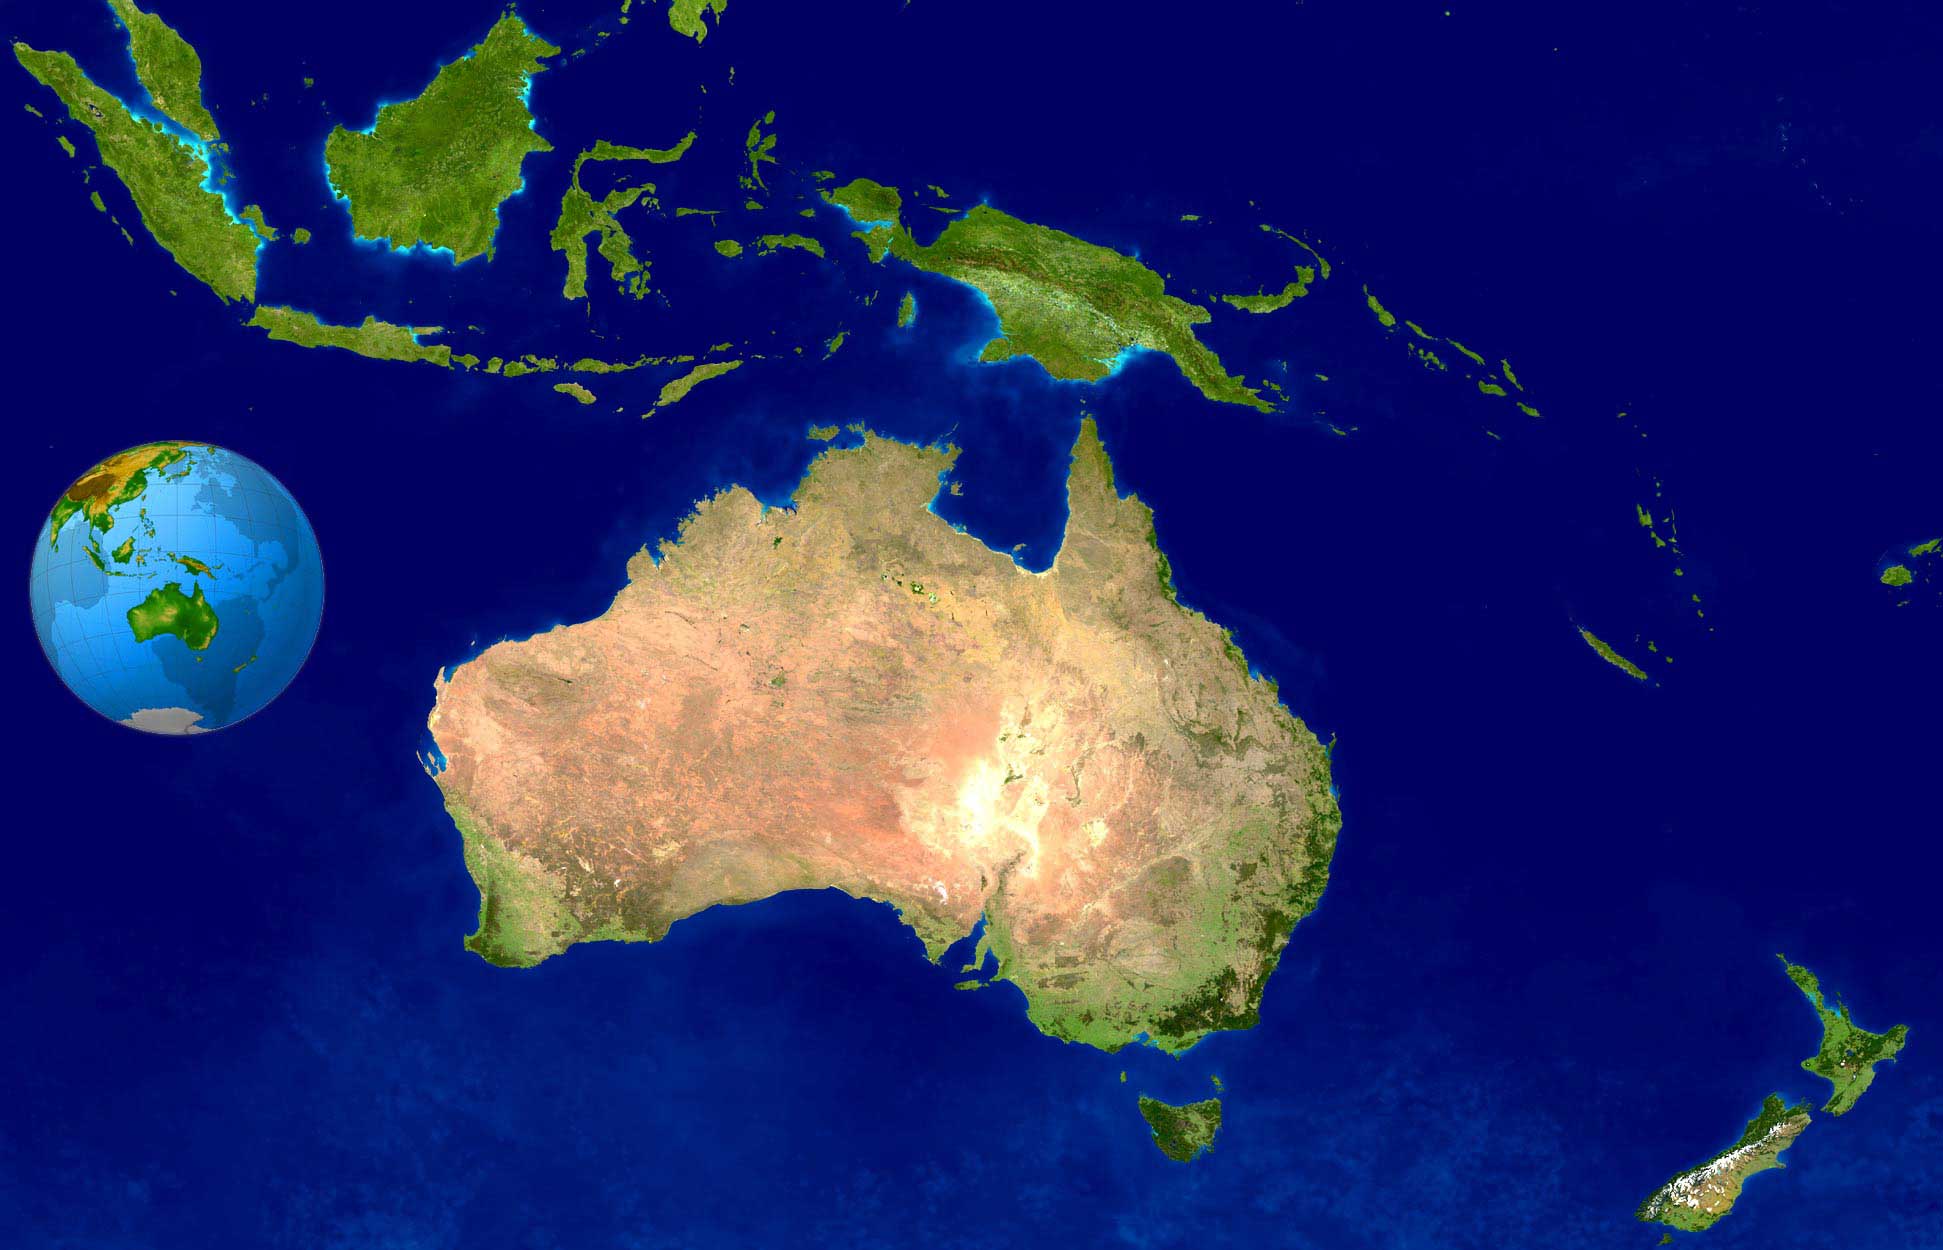 large_detailed_satellite_map_of_australia_and_oceania.jpg